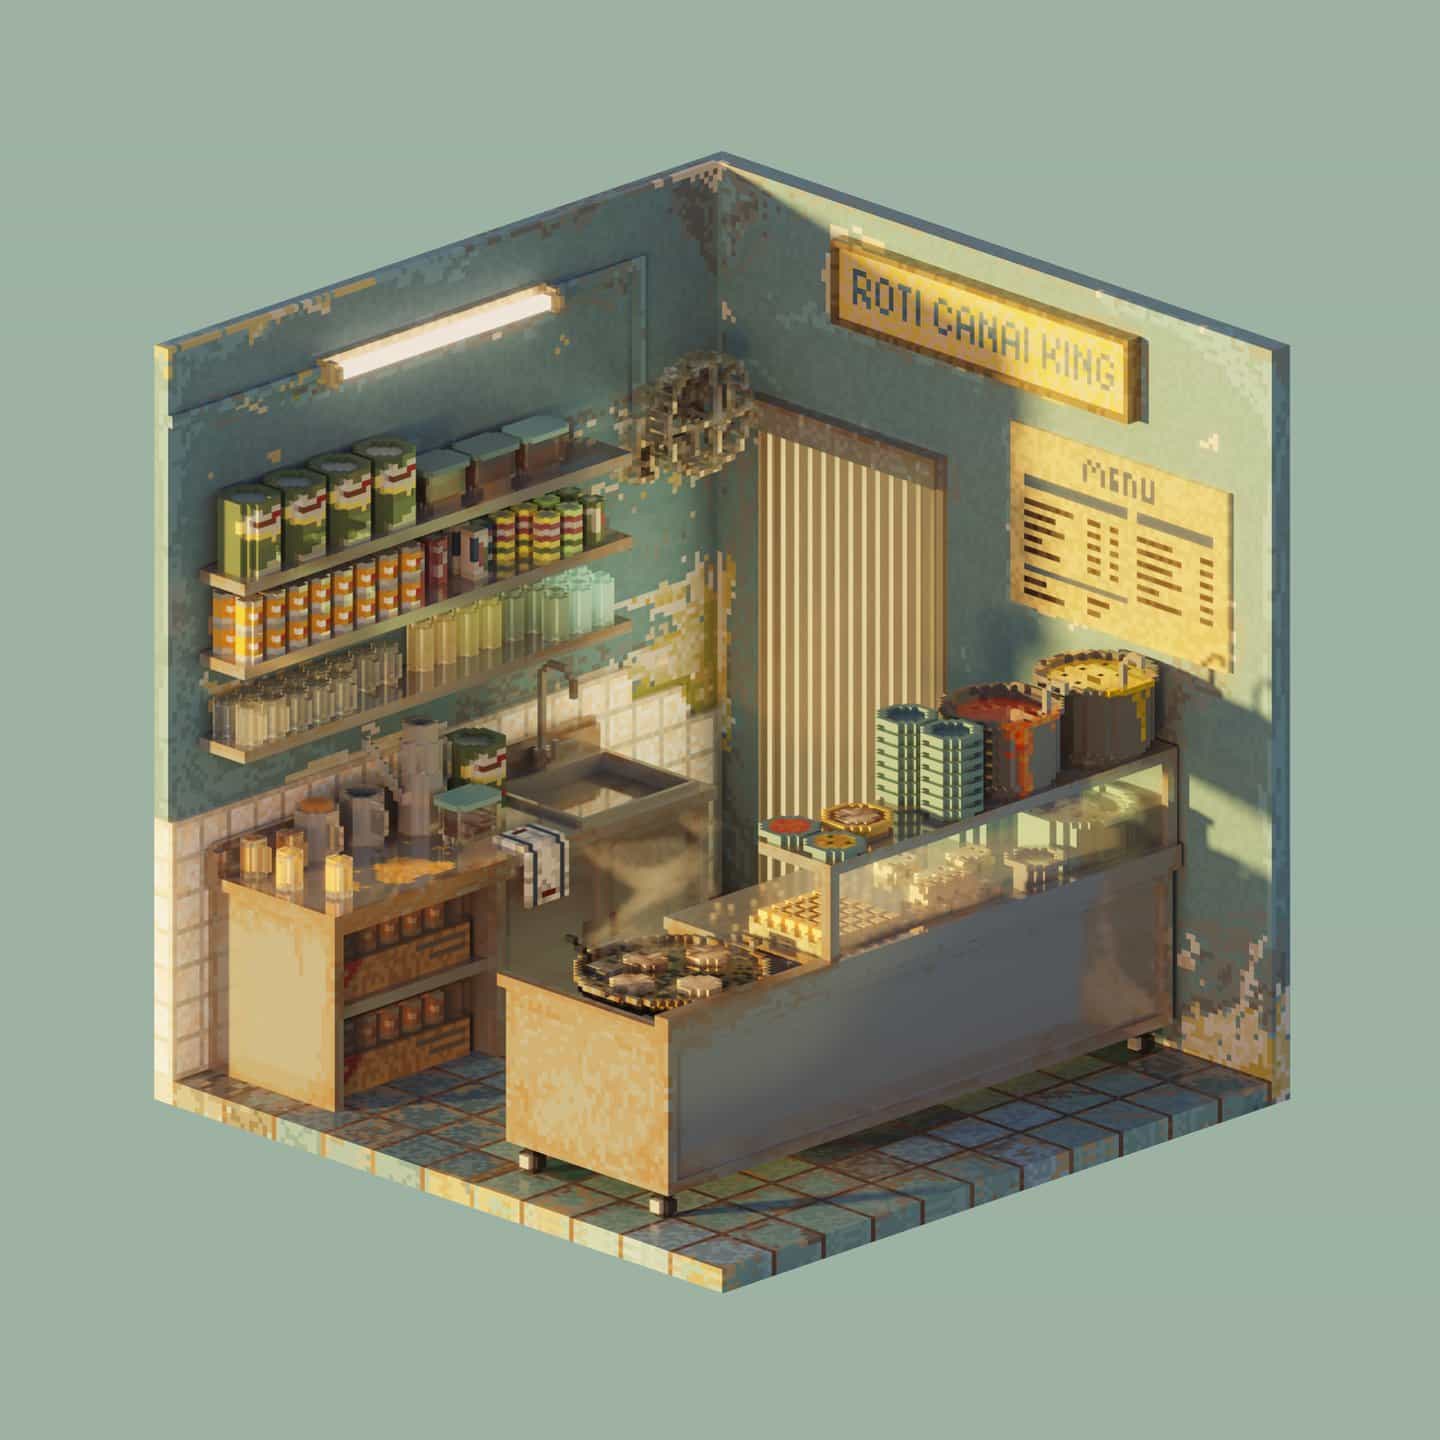 Shin Oh: Roti Canai Shop, serie Tiny Voxel Shops de 126³ (Copyright © Shin Oh, 2021)